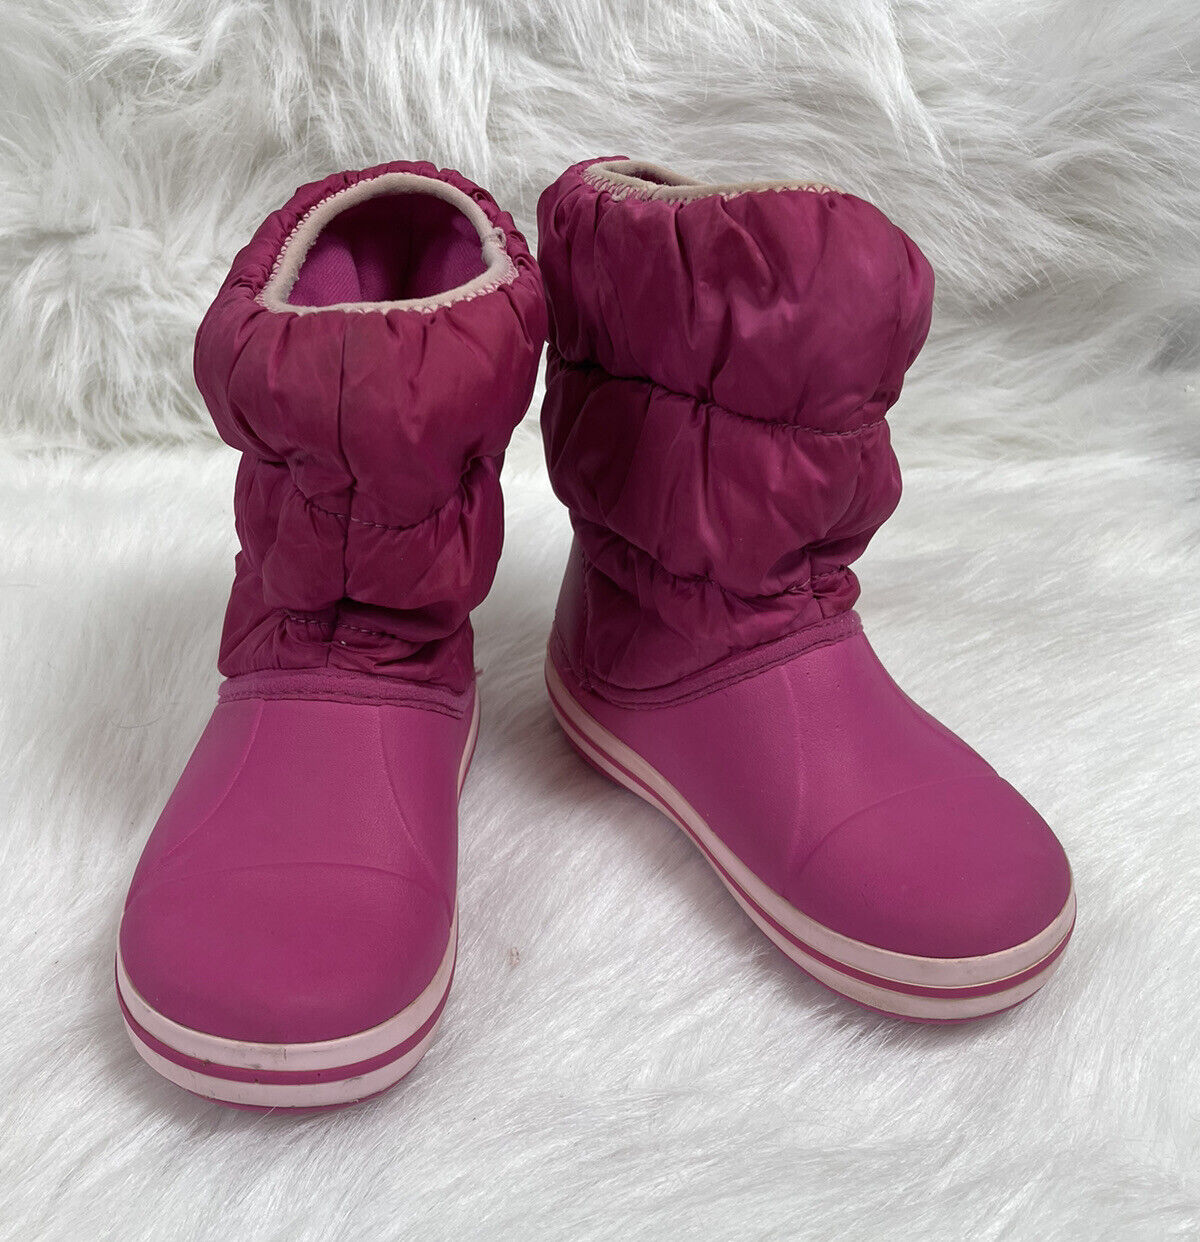 Crocs Toddler Winter Puff Boots - Size C 13 Pink Girls Snow Winter Boots |  eBay